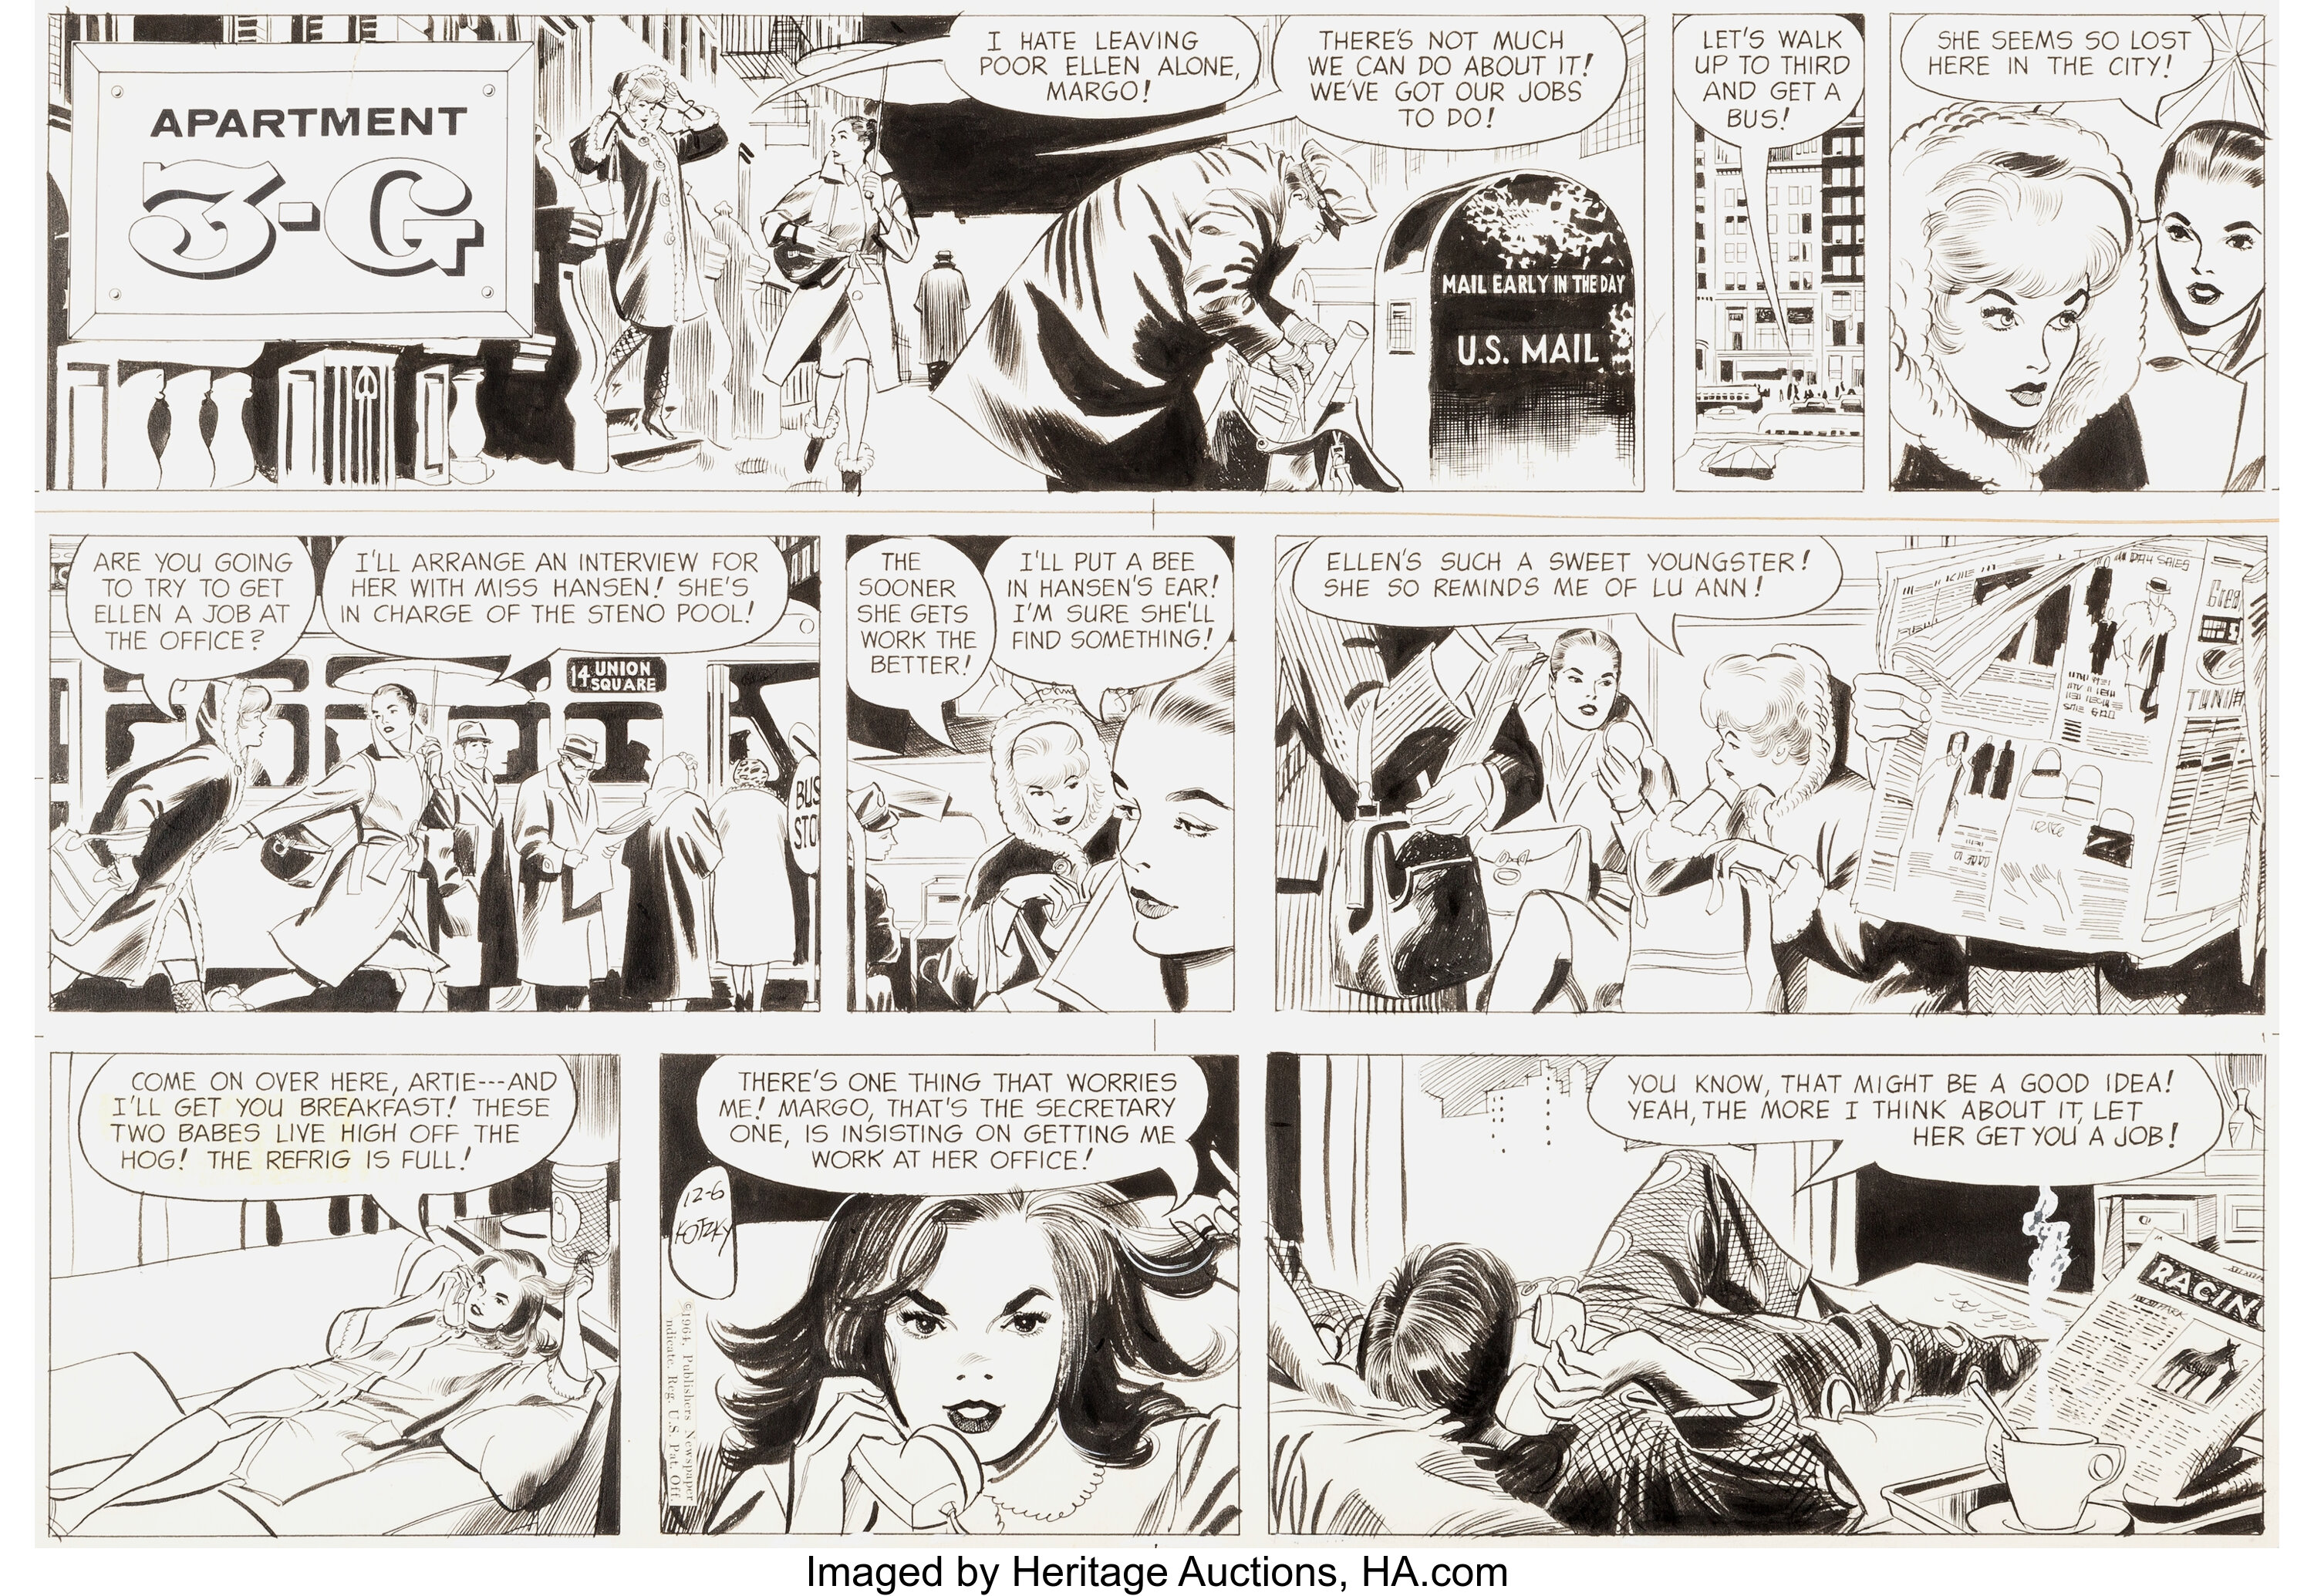 Alex Kotzky Apartment 3-G Sunday Comic Strip Original Art, dated 